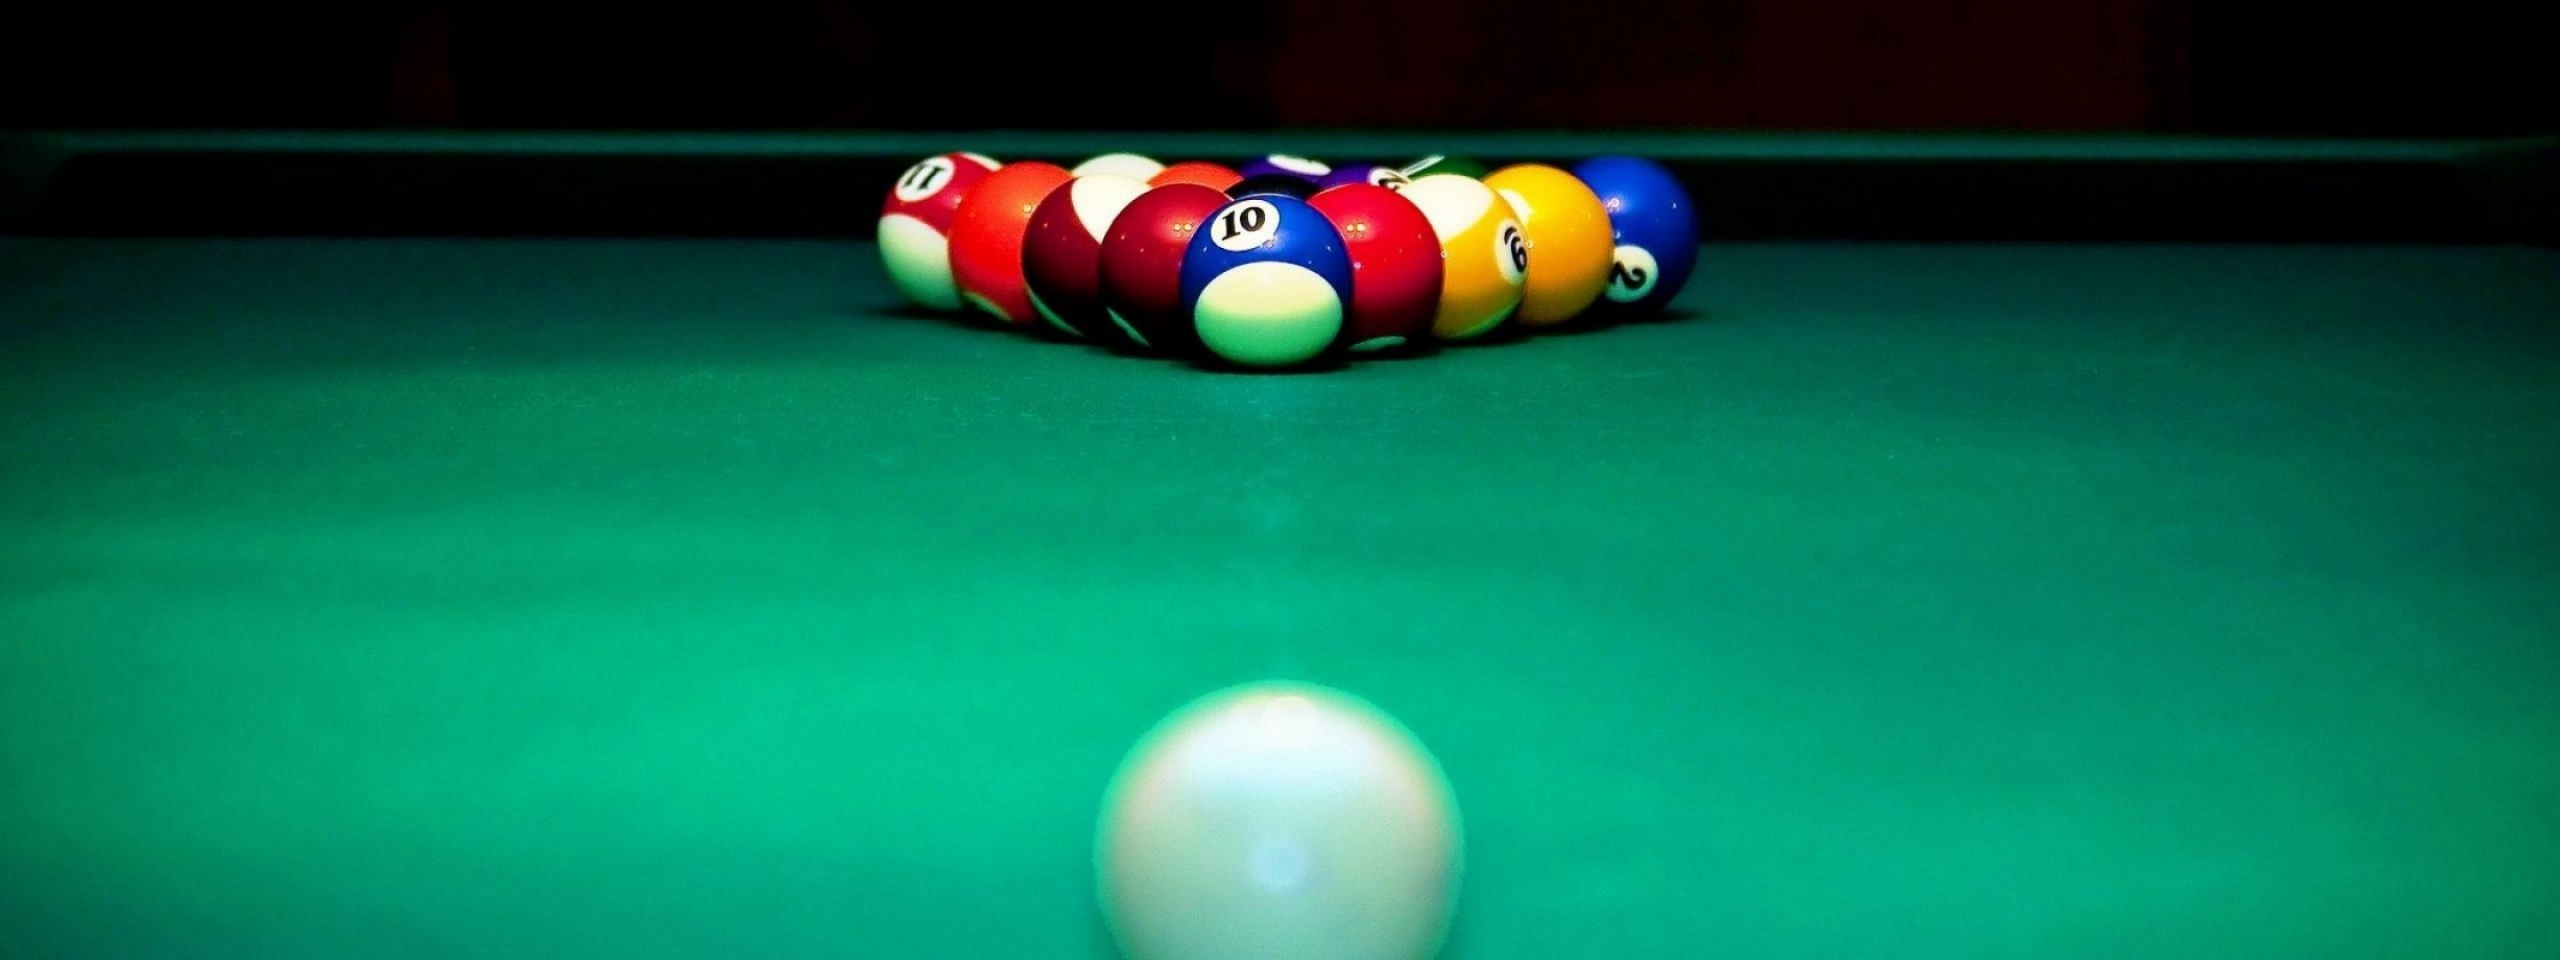 Billiard Table And Balls